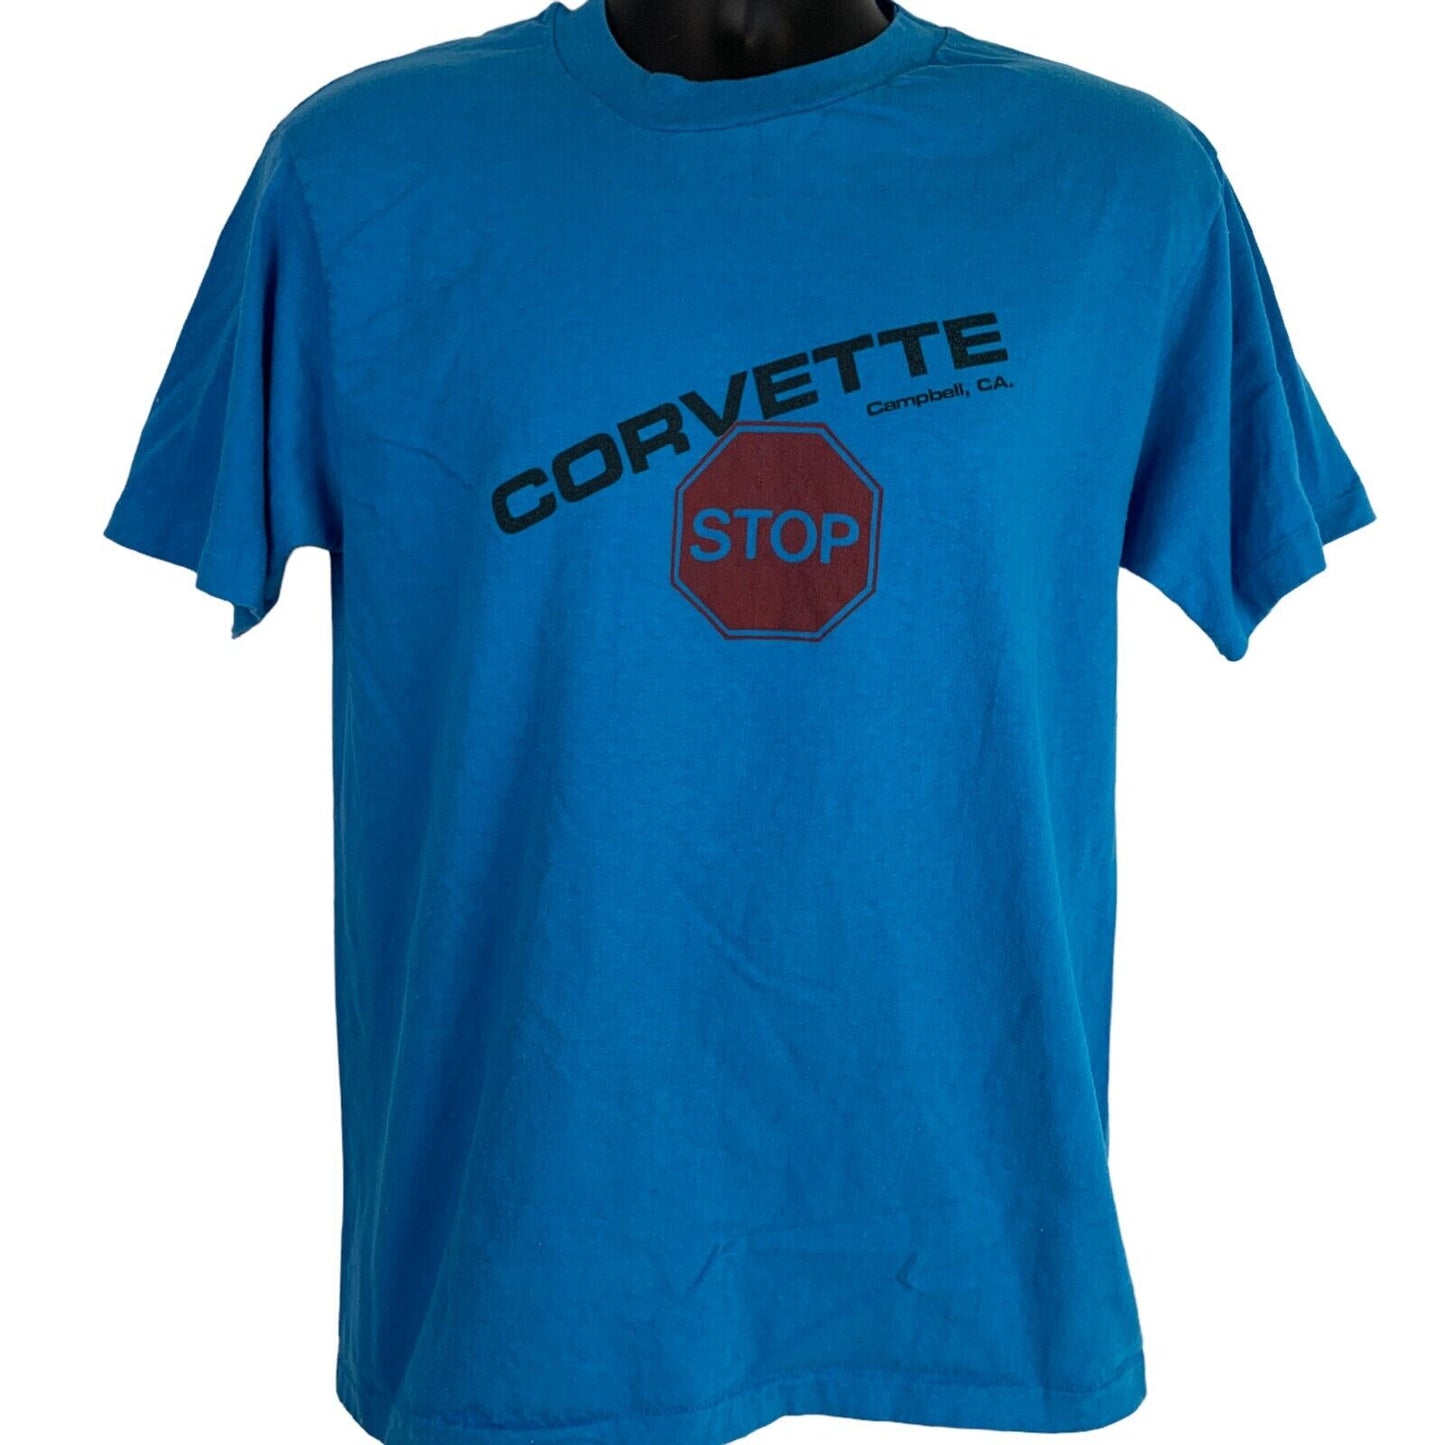 Corvette Stop Campbell California T Shirt Vintage 80s Single Stitch Tee Medium